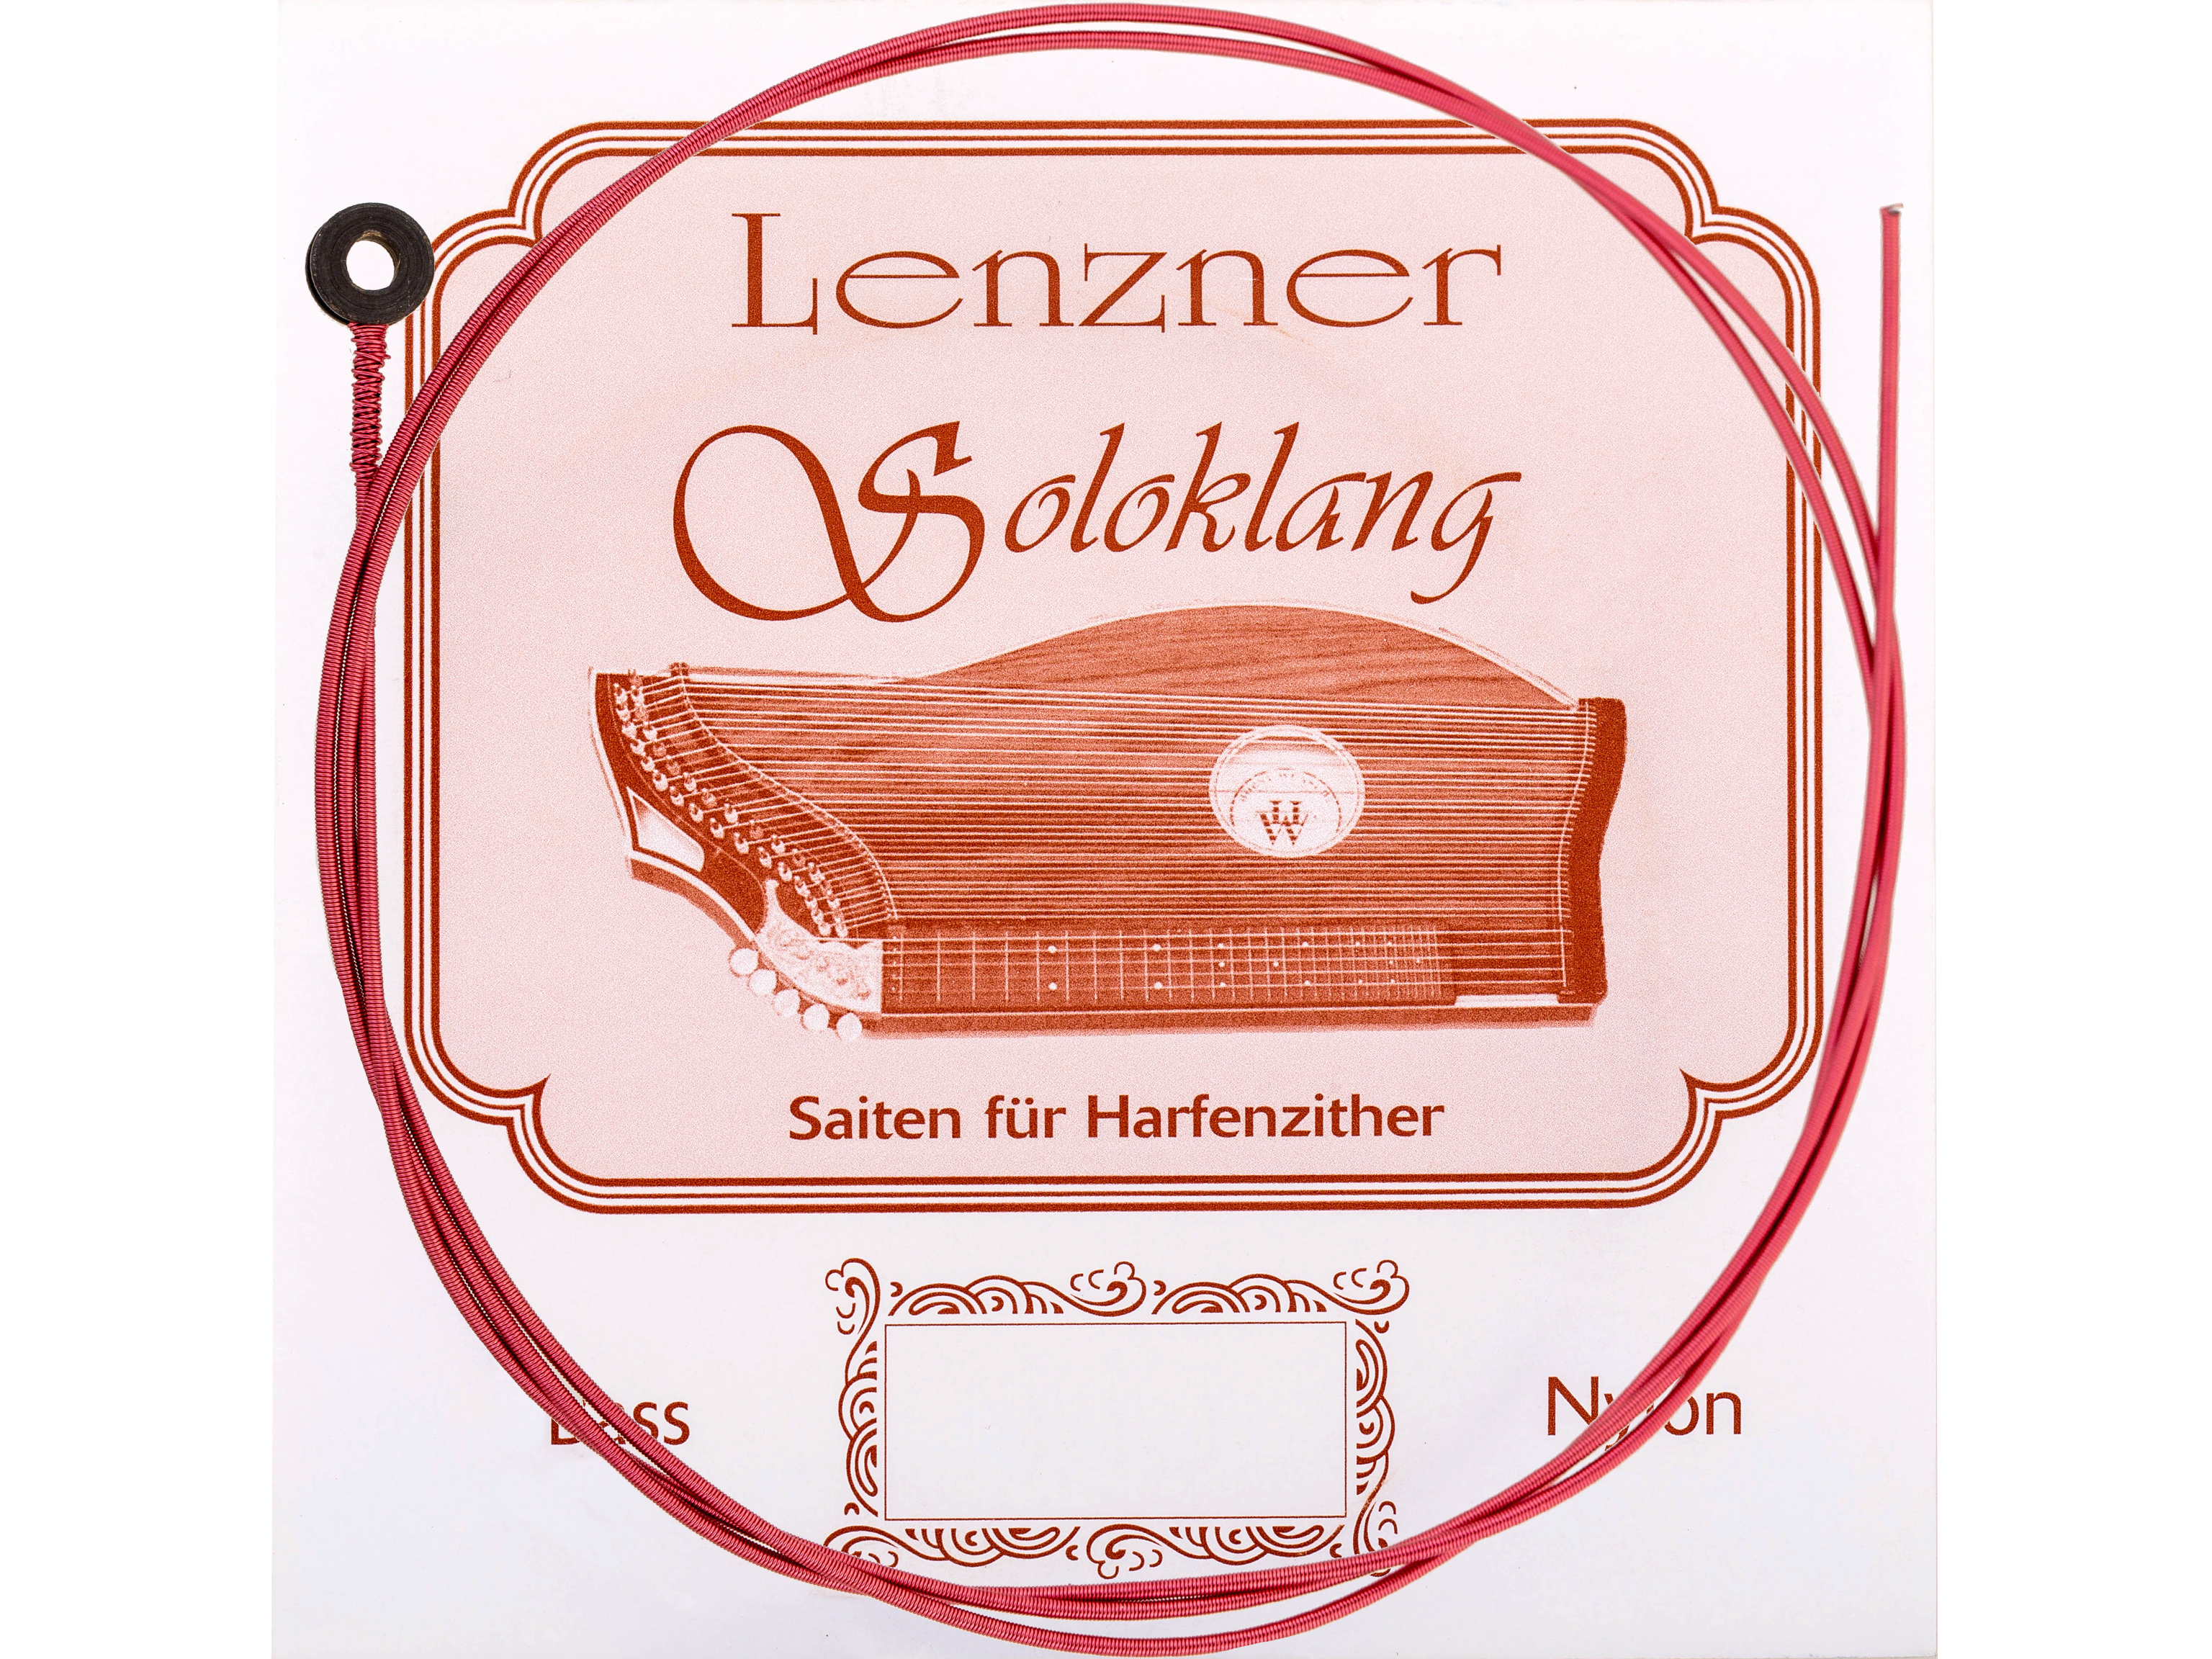 Lenzner Fis 22.Zithersaite Soloklang Bass